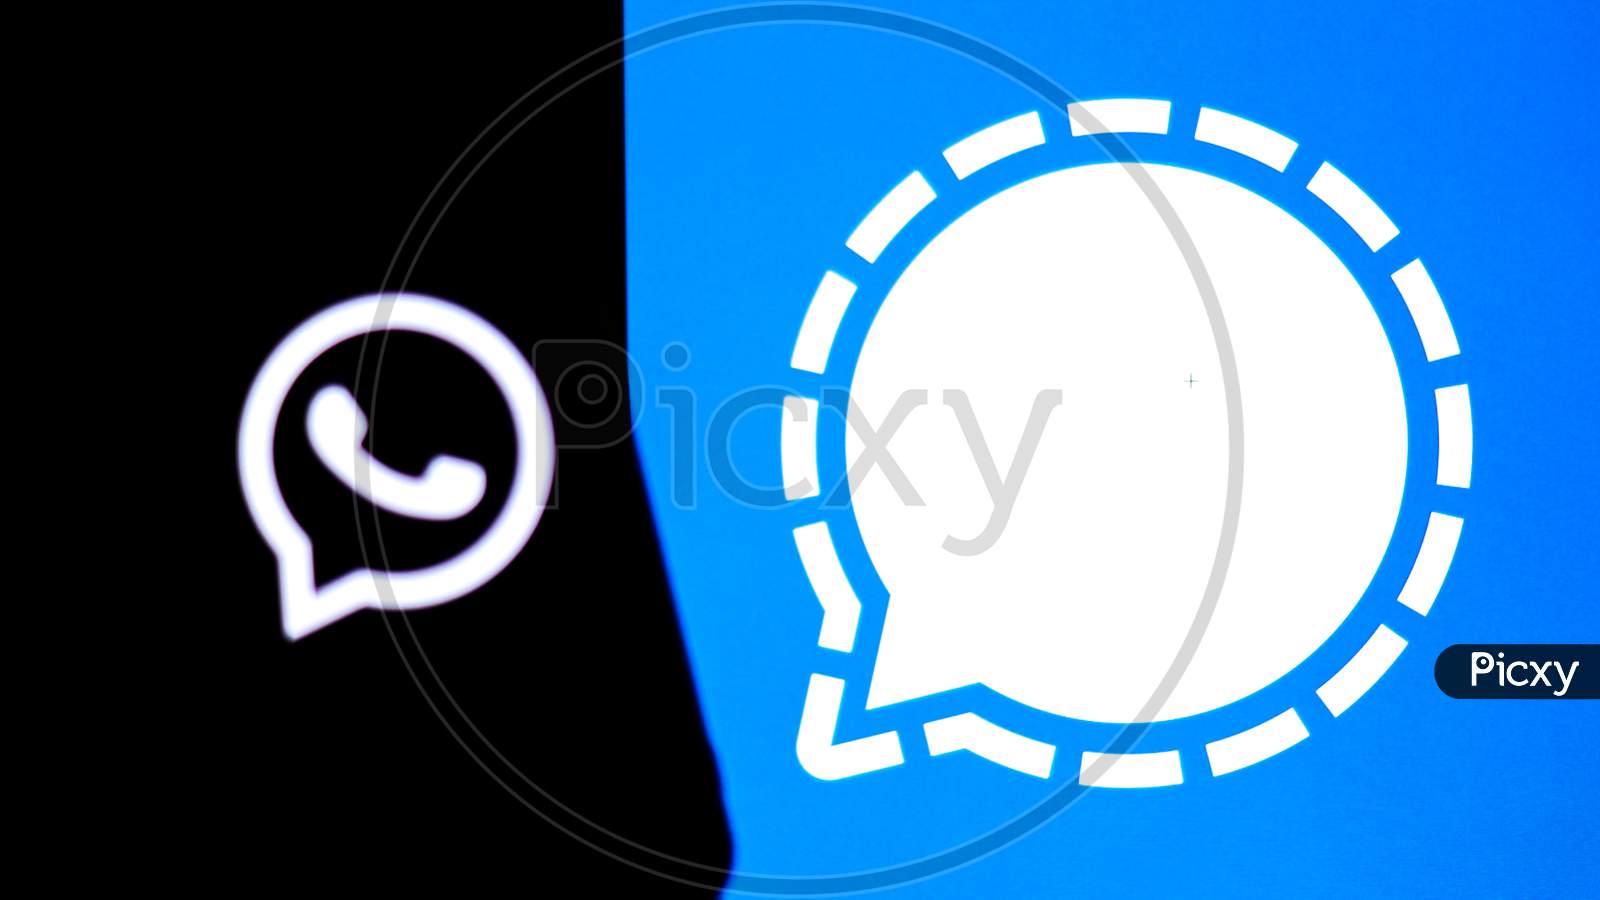 Signal Mobile Messaging Appl Logo an Alternative to Whatsapp on Smartphone Screen